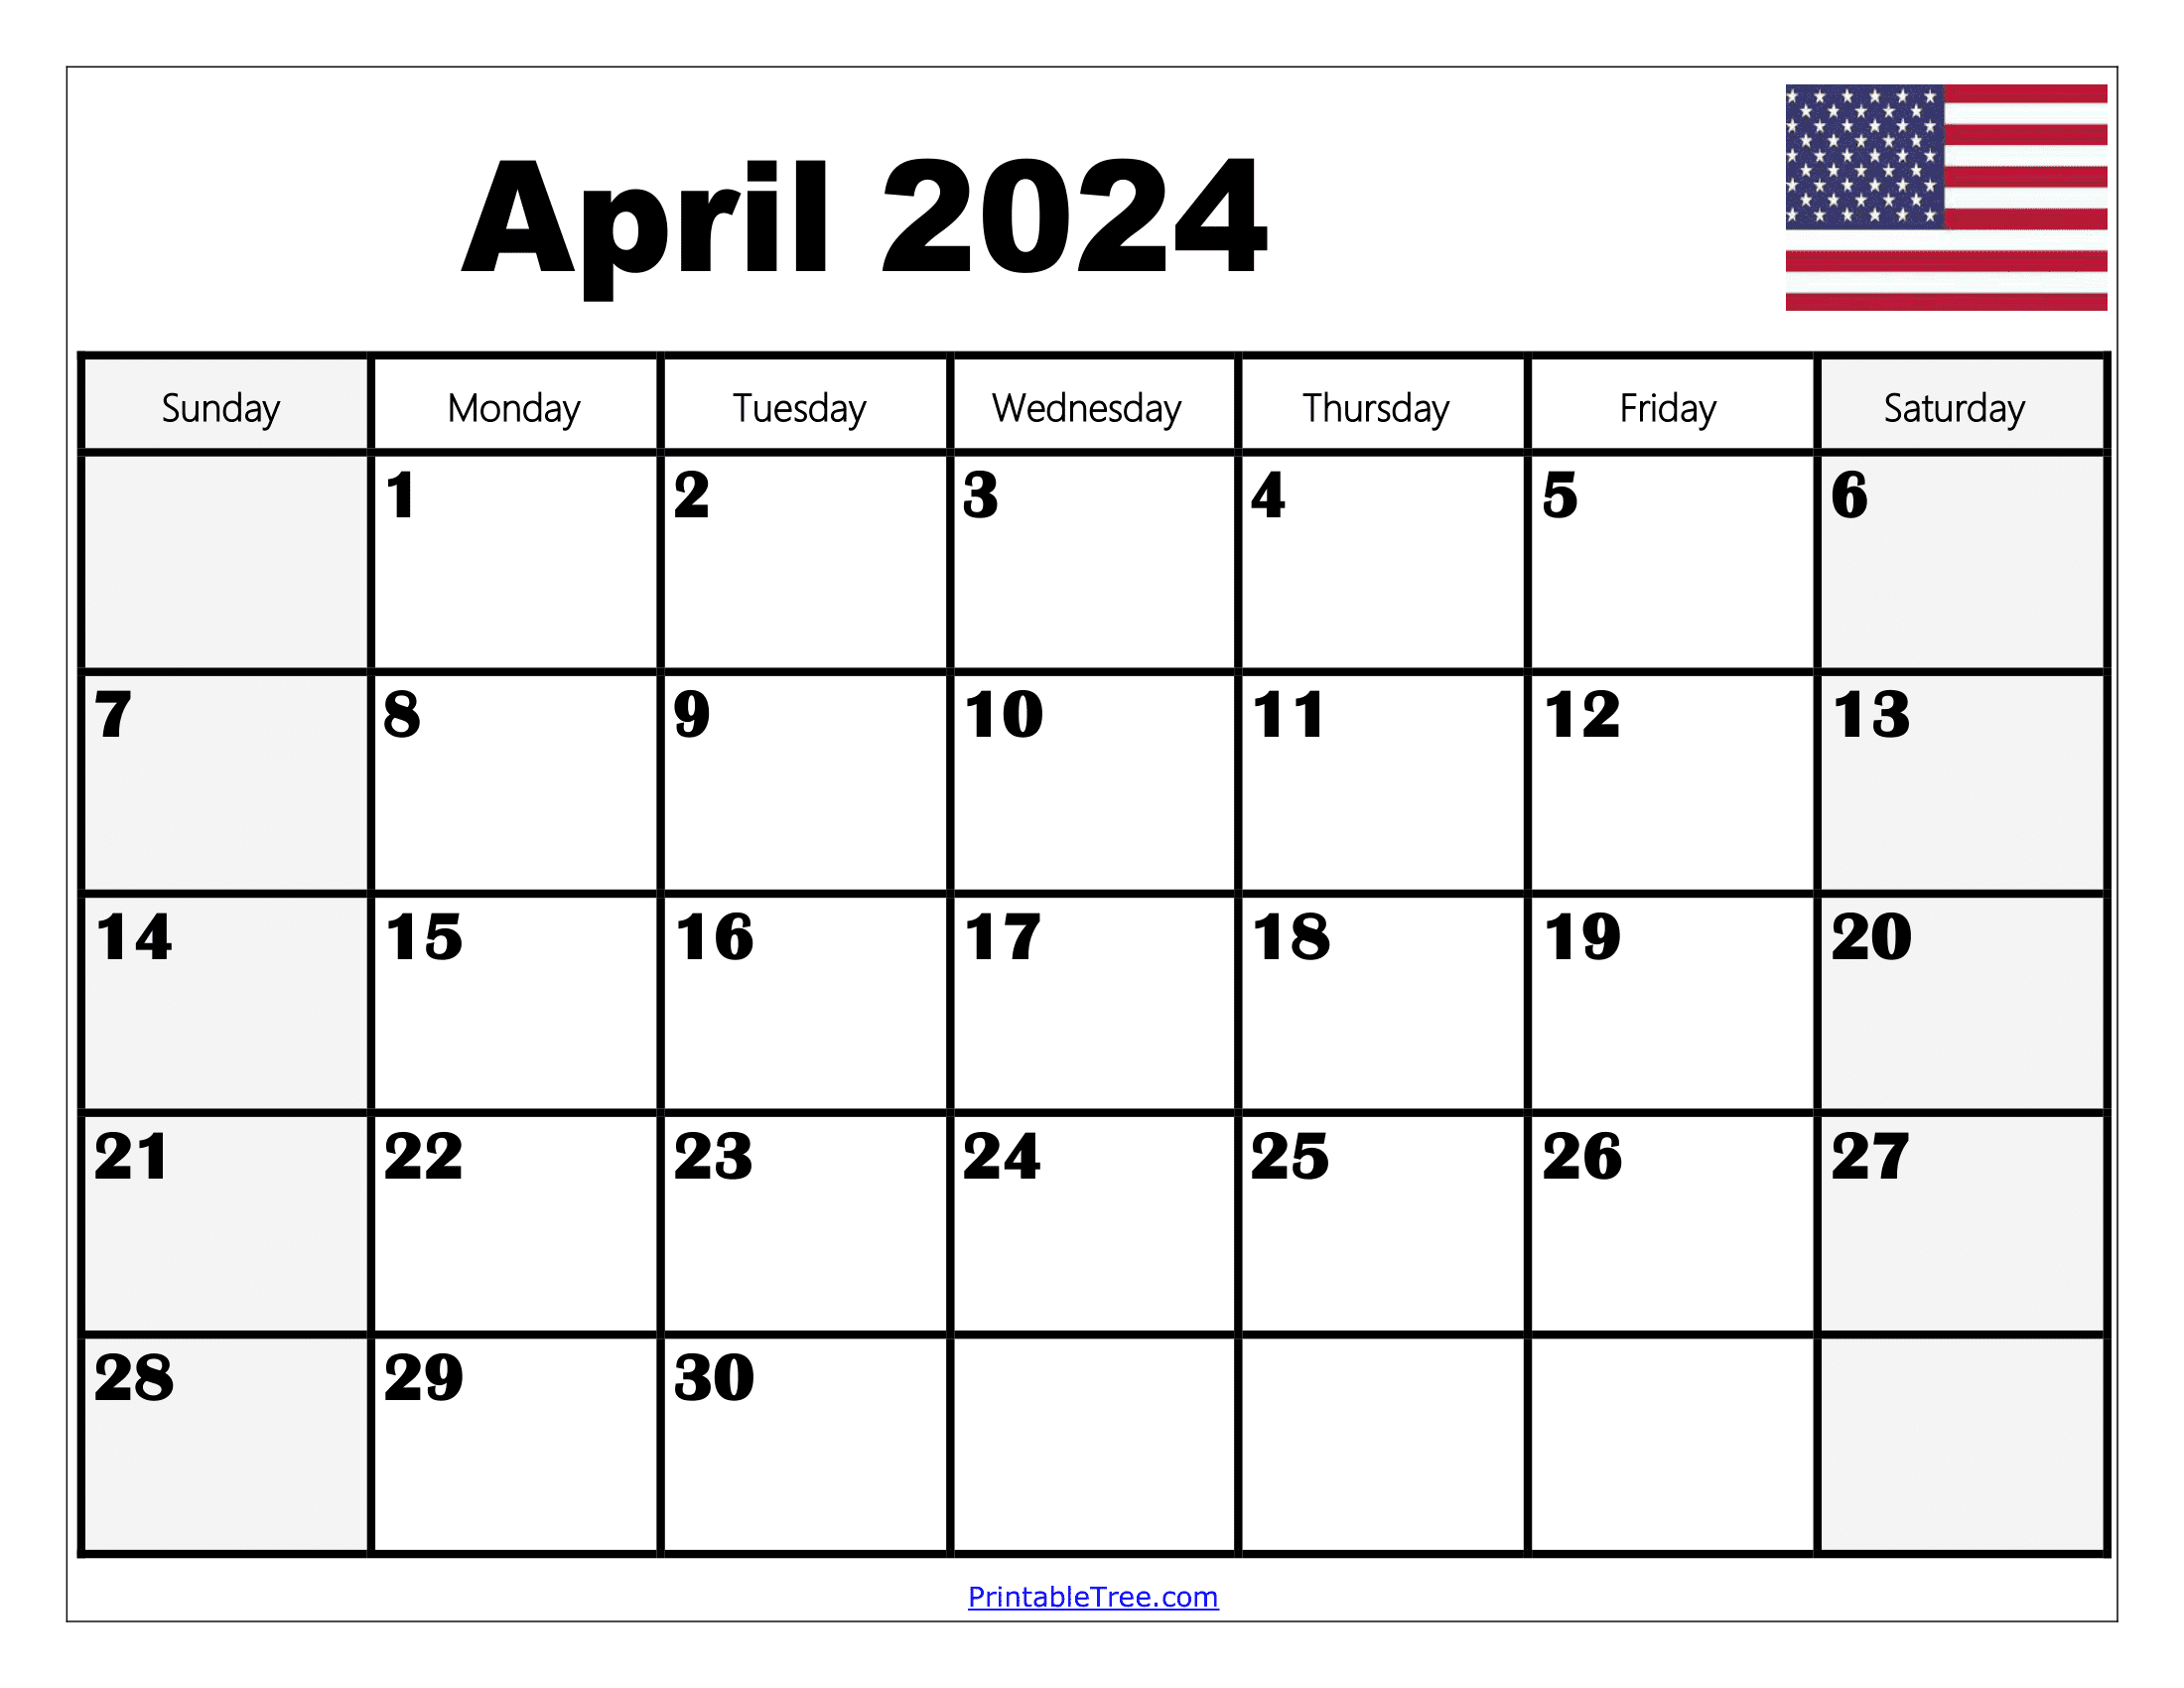 Blank April 2024 Calendar Printable Pdf Template With Holidays | Printable Calendar 2024 April